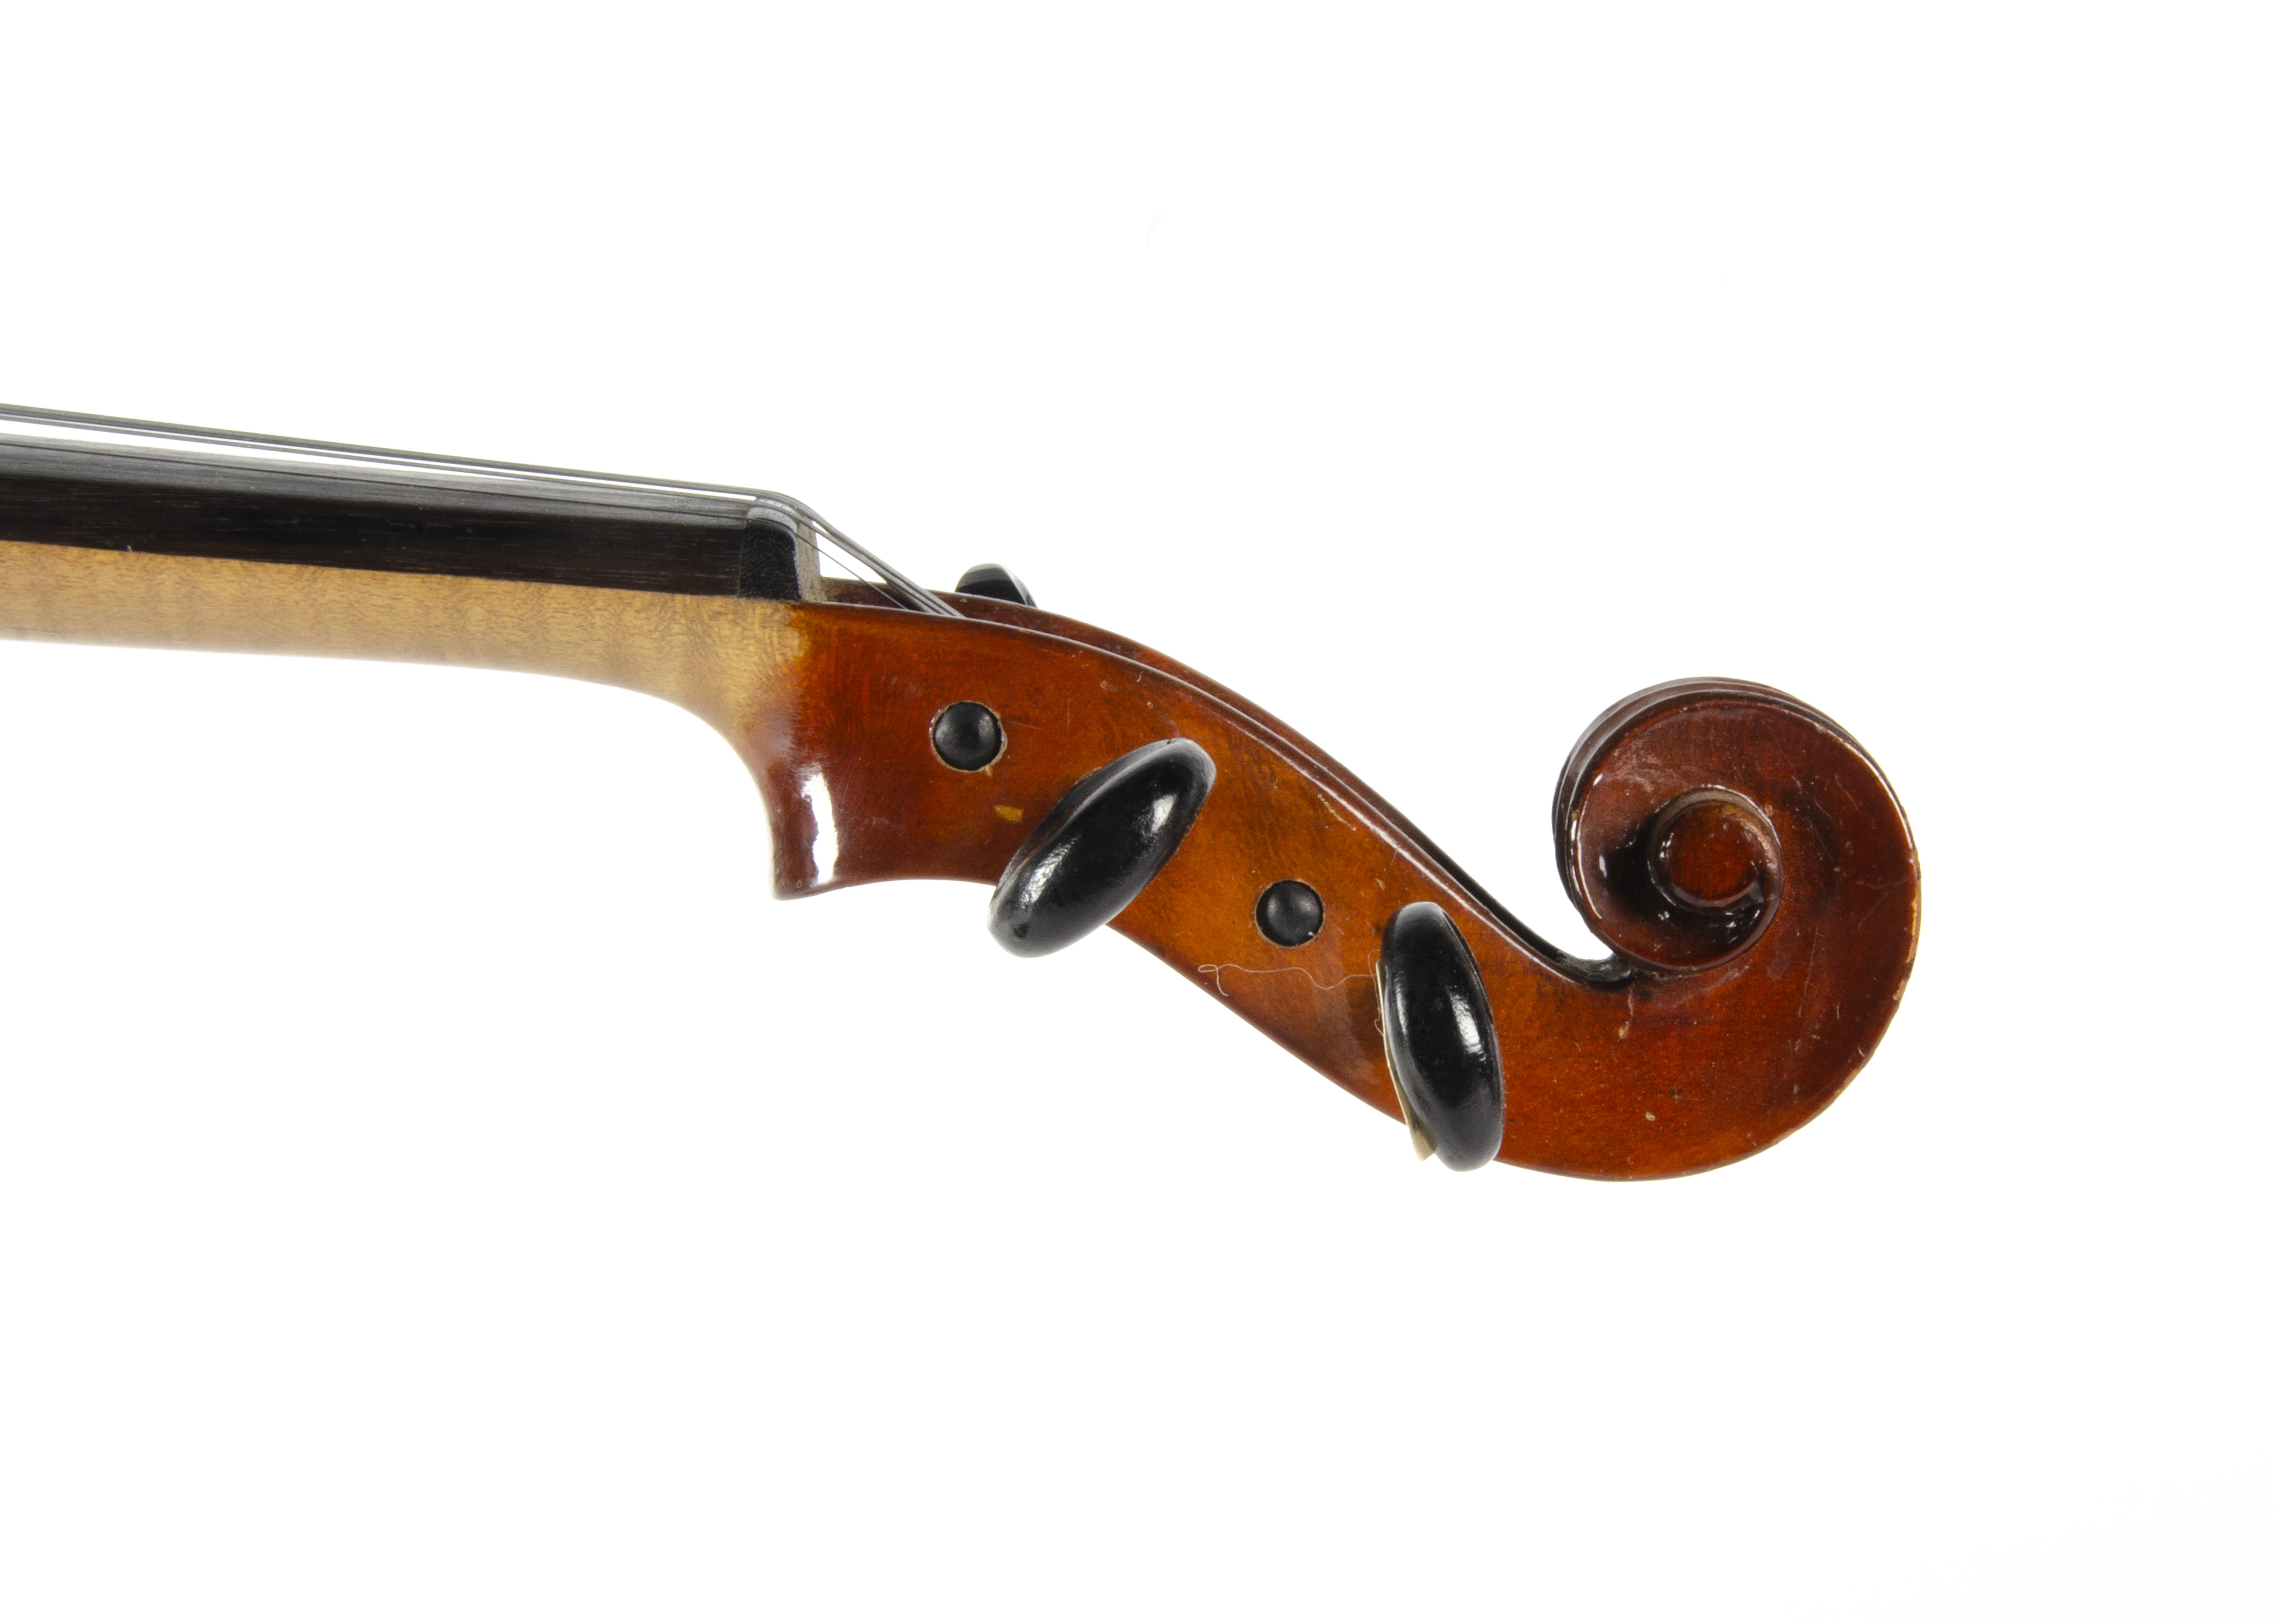 Caspa da Salo violin, early 20th century violin with decorative purfling, Caspar da Salo carved to - Image 3 of 4